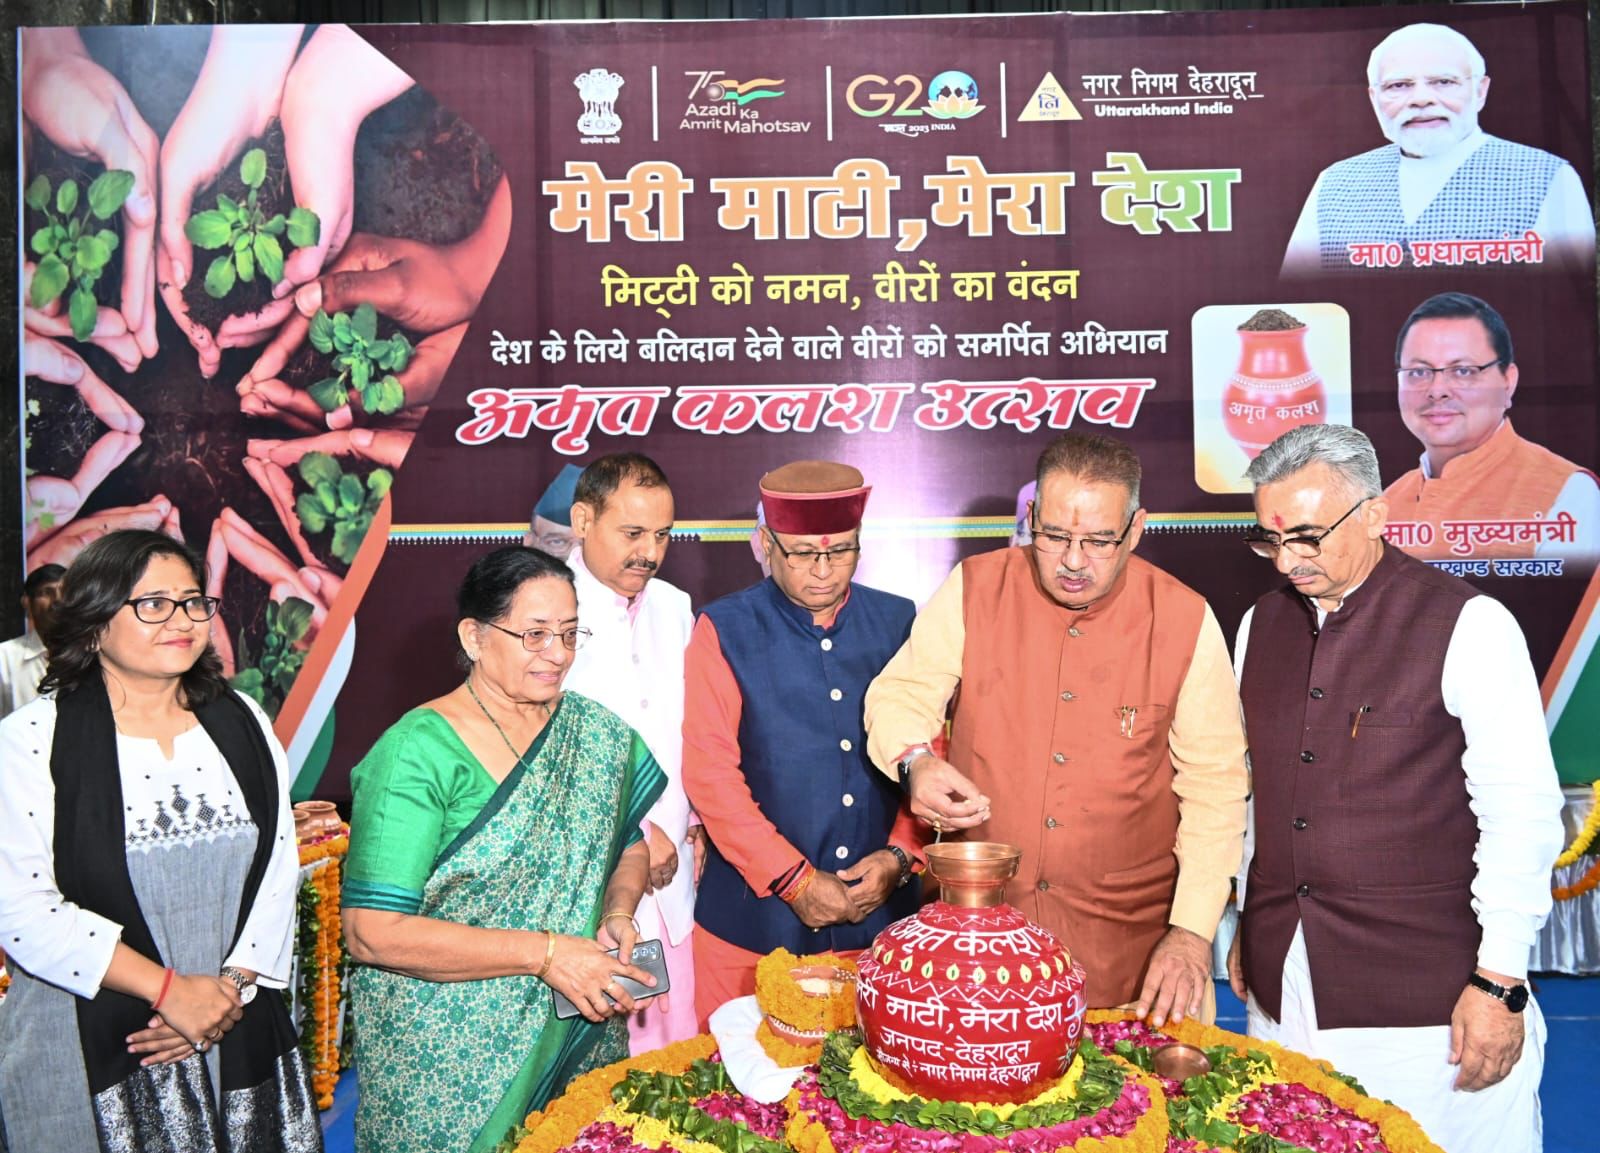 Minister Ganesh Joshi participated in the Amrit Kalash Utsav program